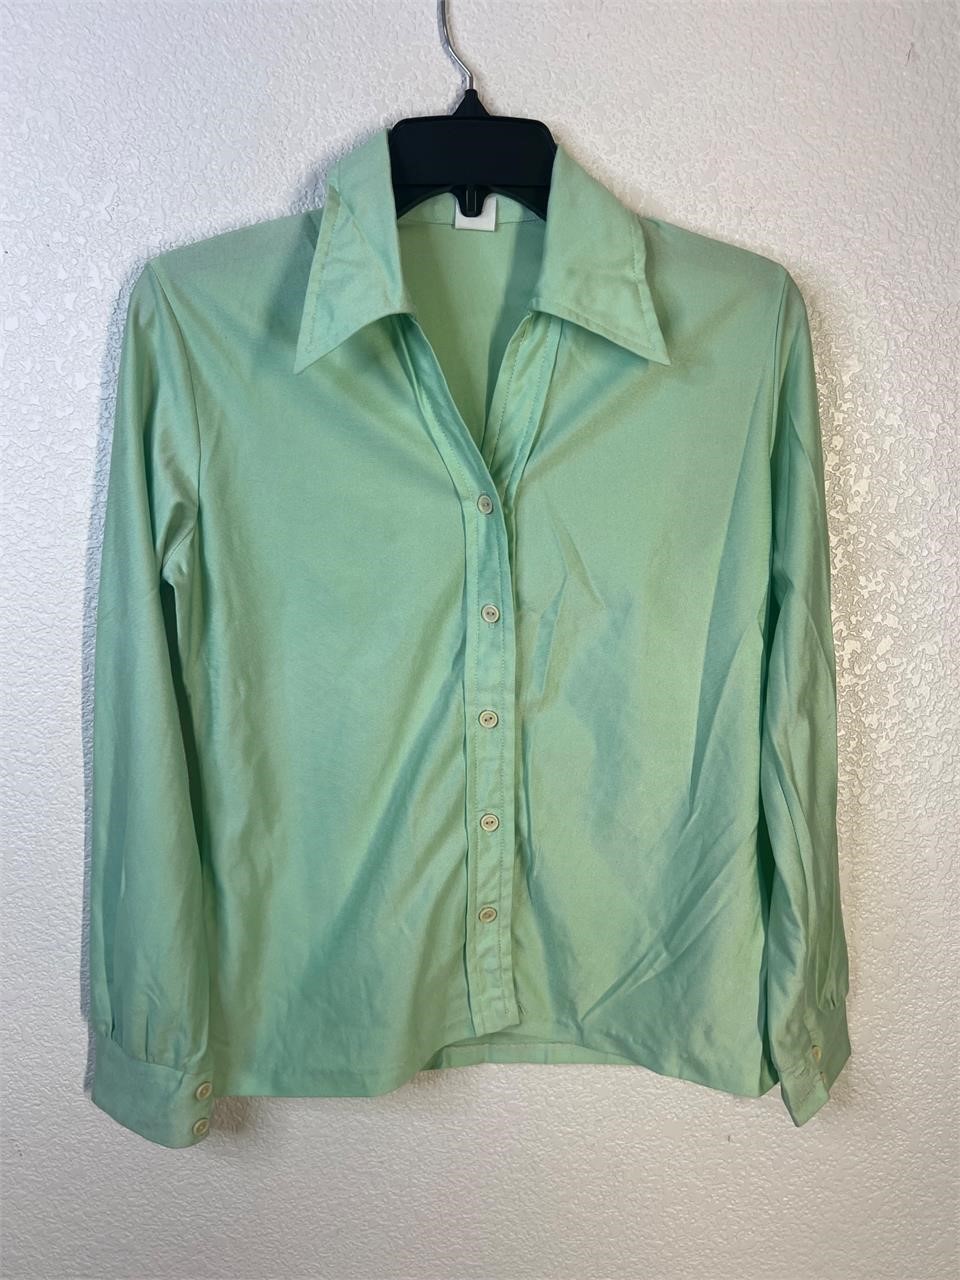 Vintage 80s Green Femme Button Up Shirt